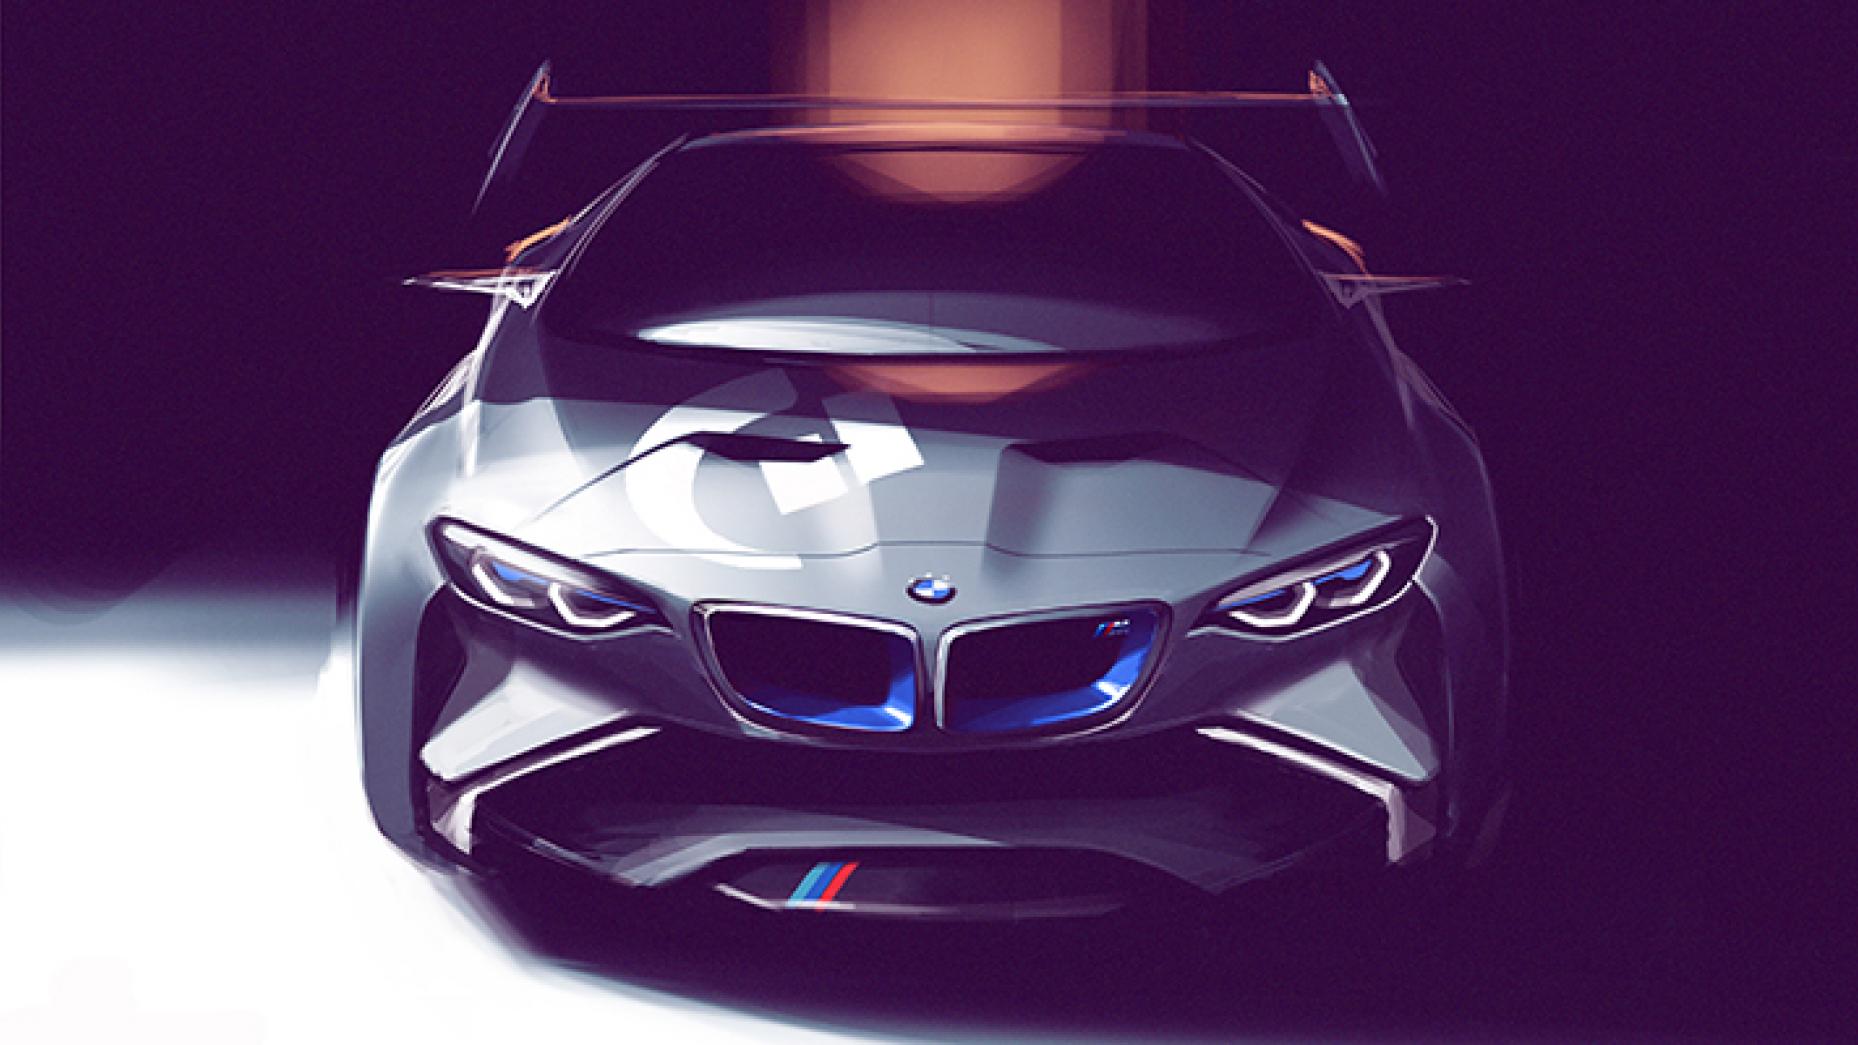 15 2013 BMW Vision Gran Turismo